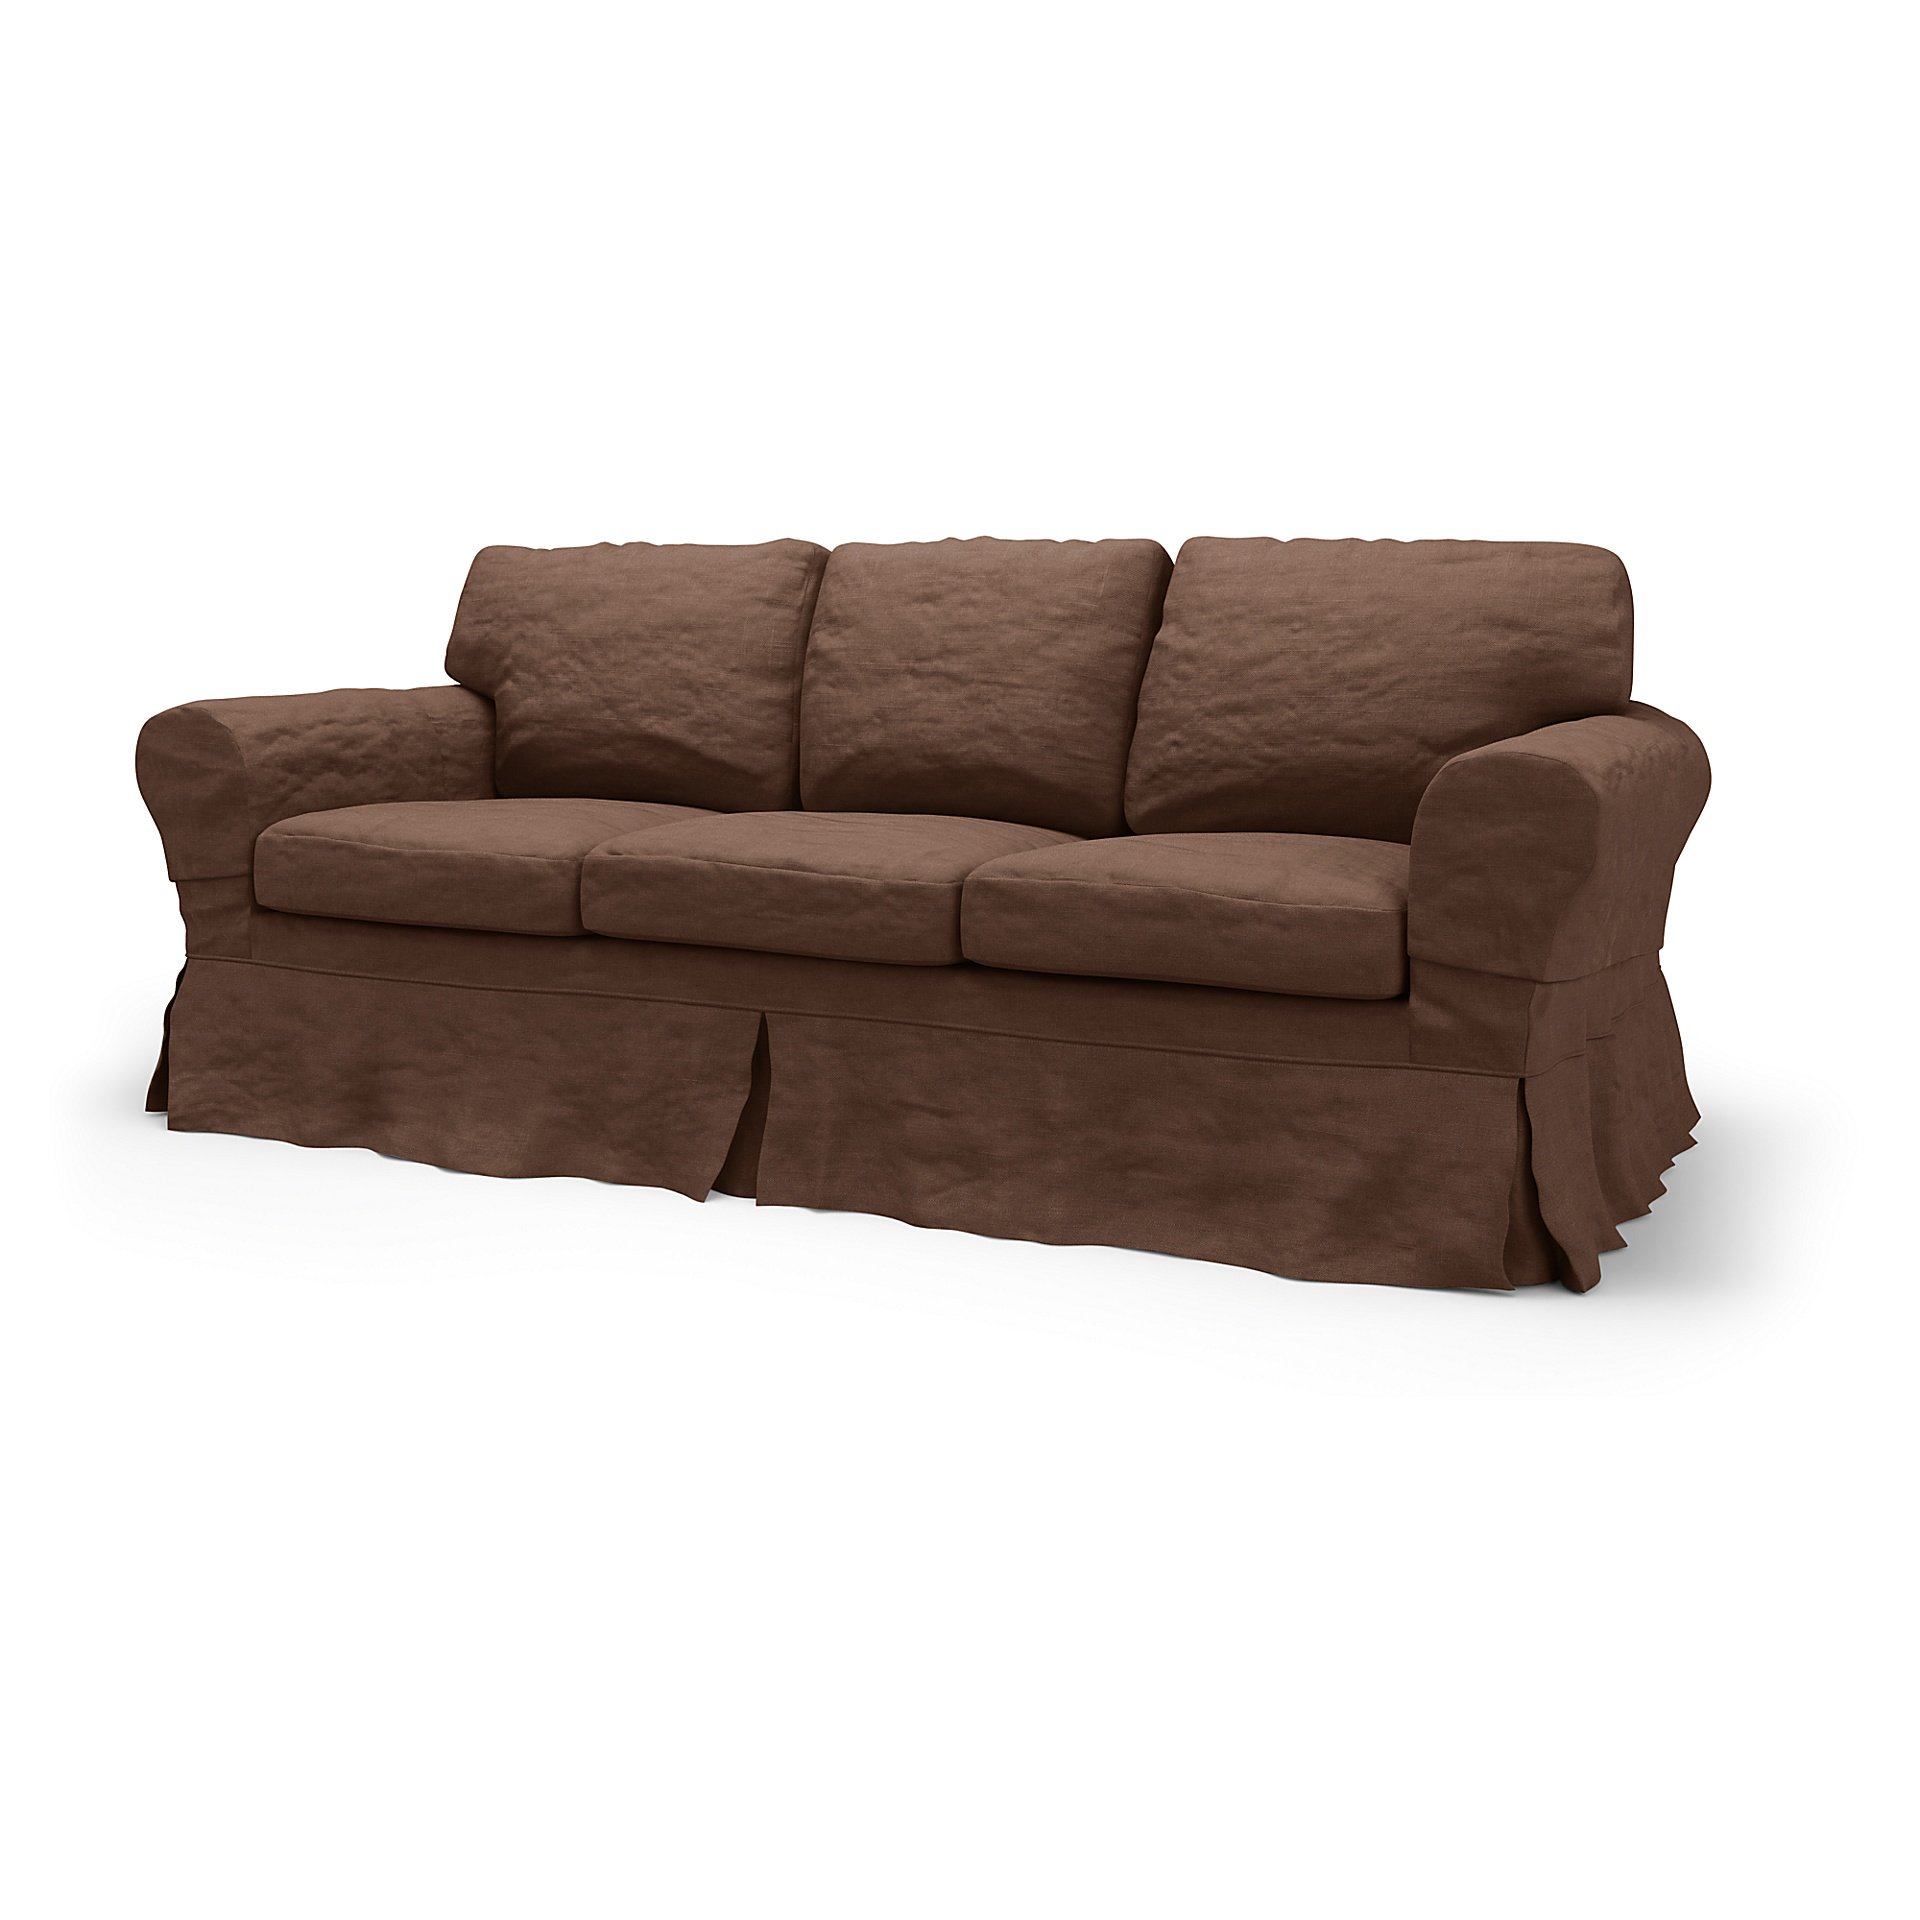 IKEA - Ektorp 3 Seater Sofa Bed Cover, Chocolate, Linen - Bemz